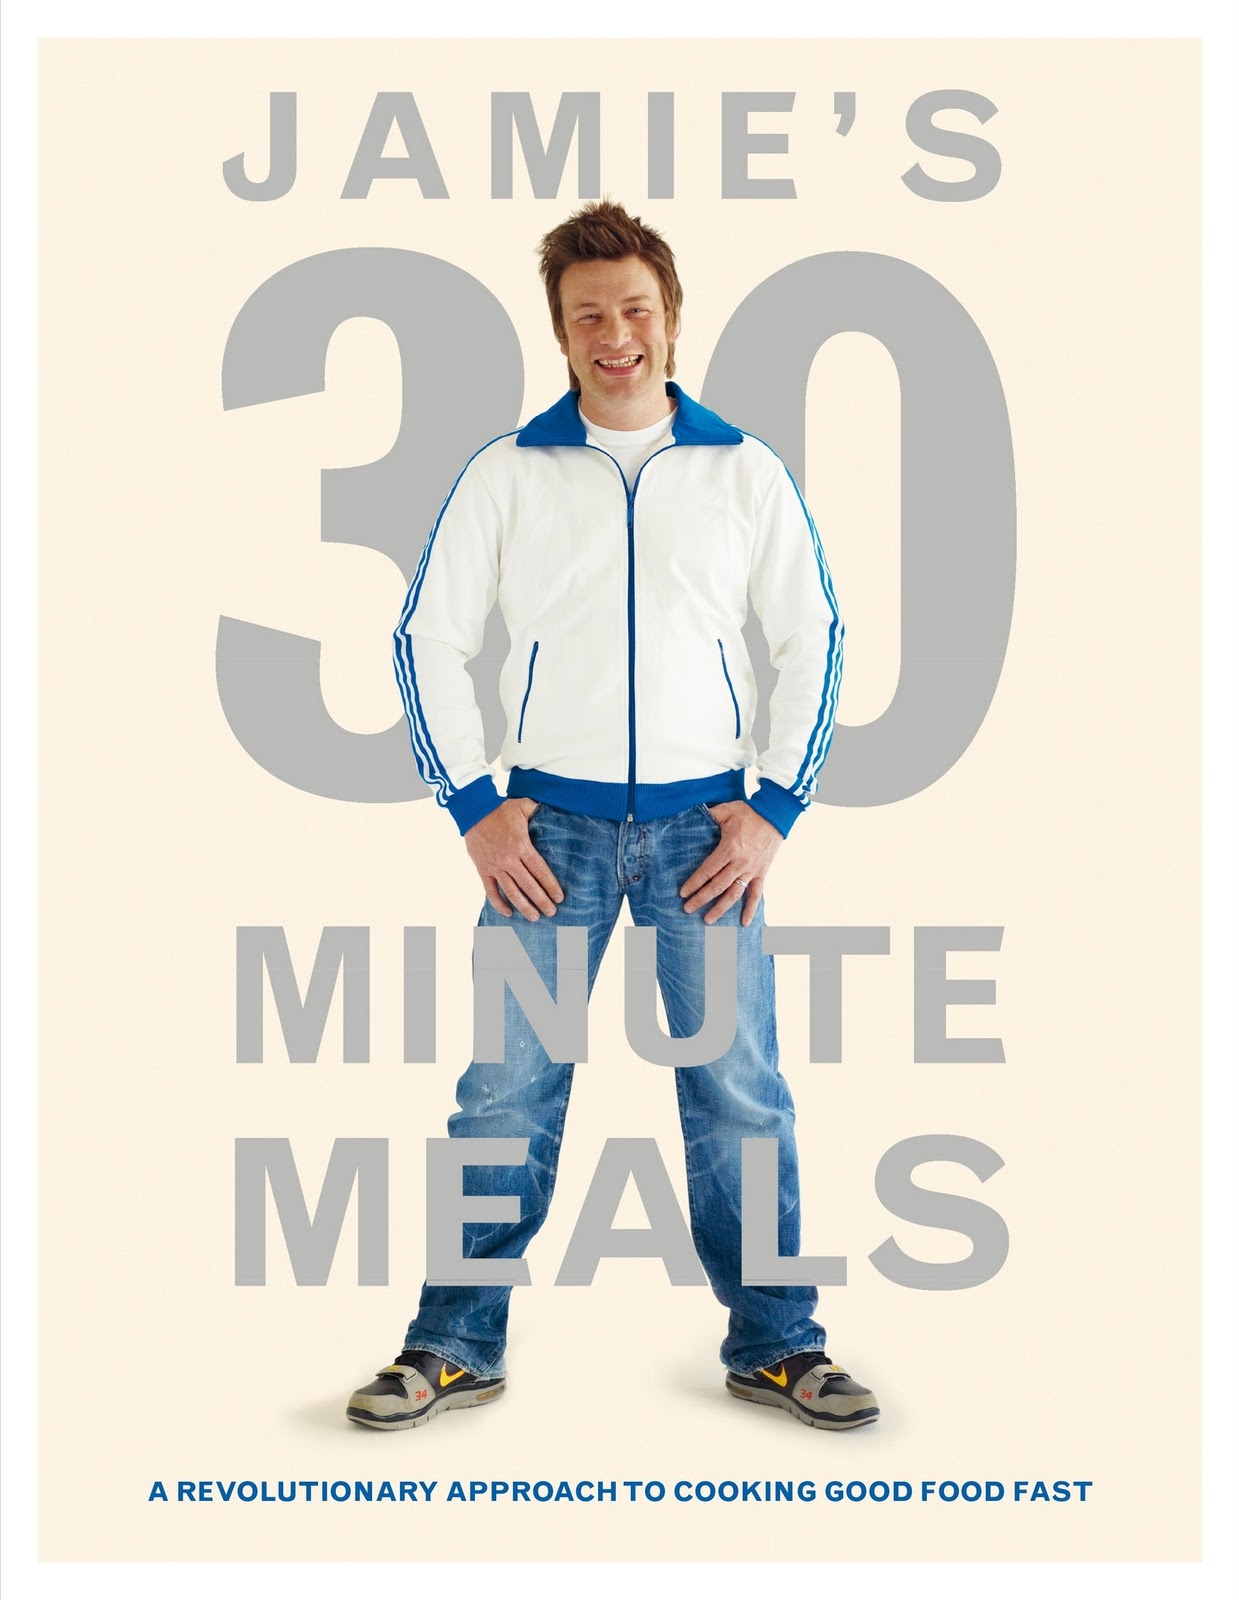 Jamie s 30 Minute Meals movie